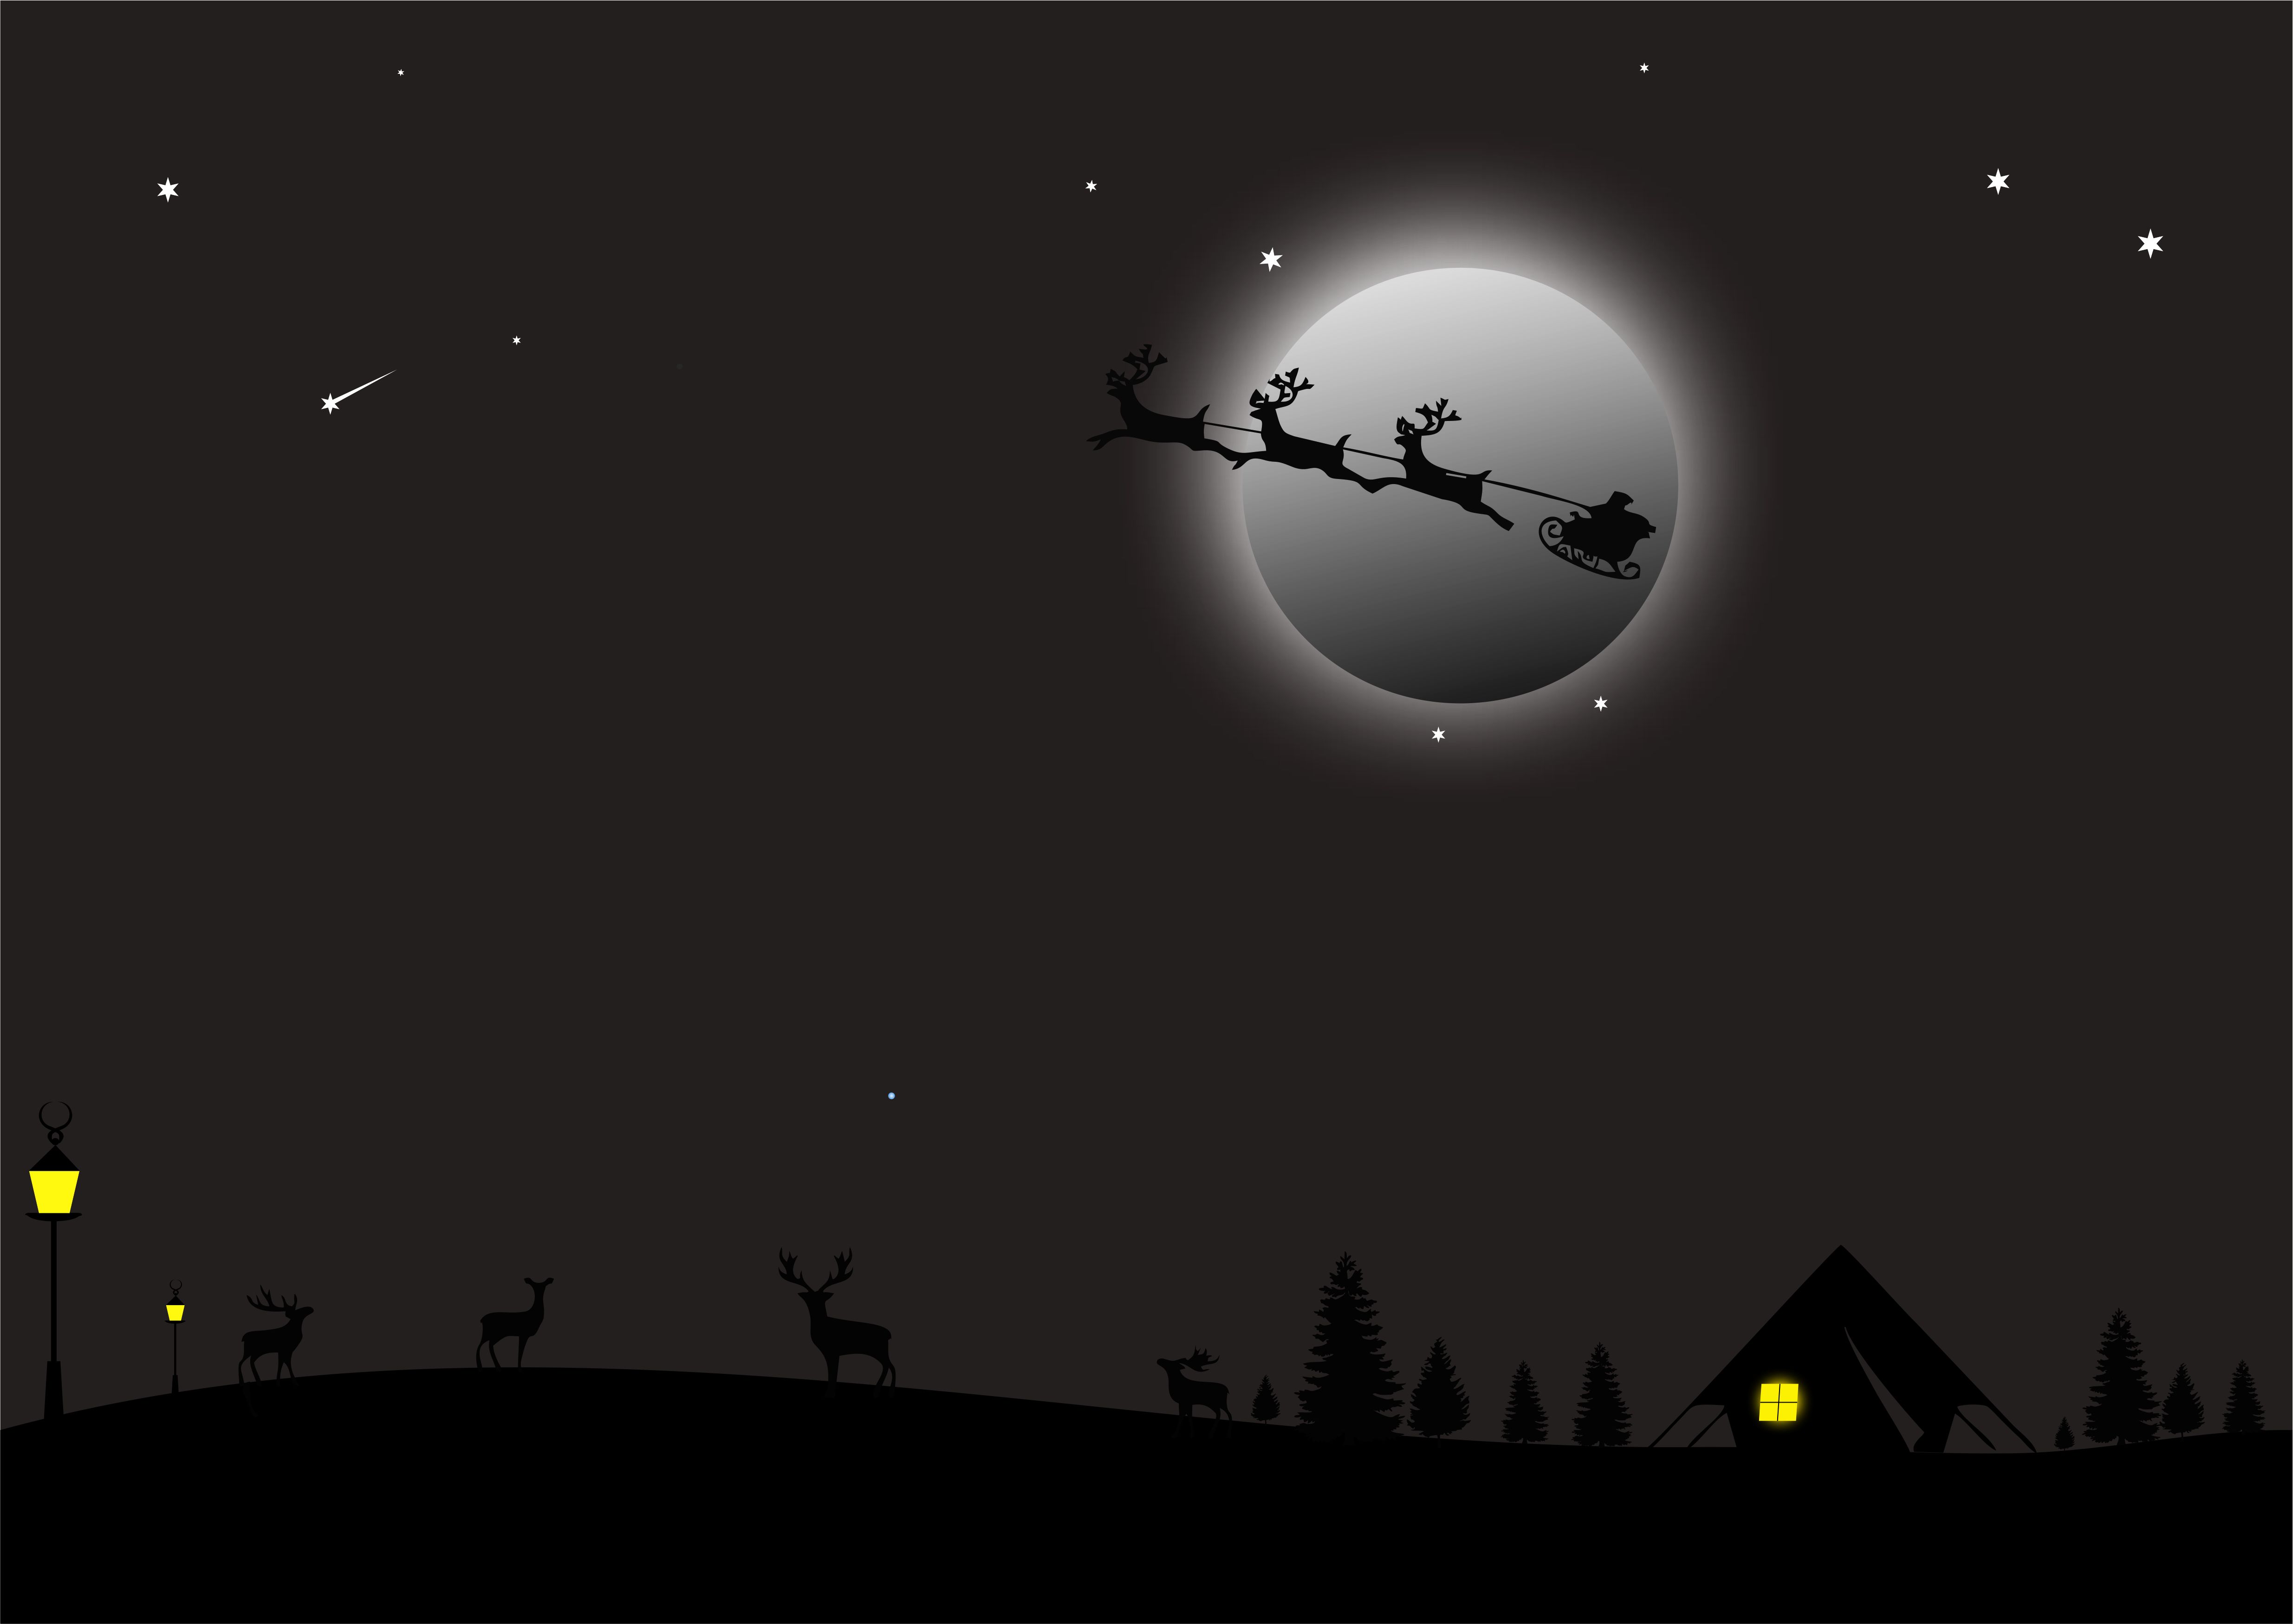 Free download wallpaper Night, Moon, Christmas, Holiday, Sleigh, Santa, Reindeer on your PC desktop